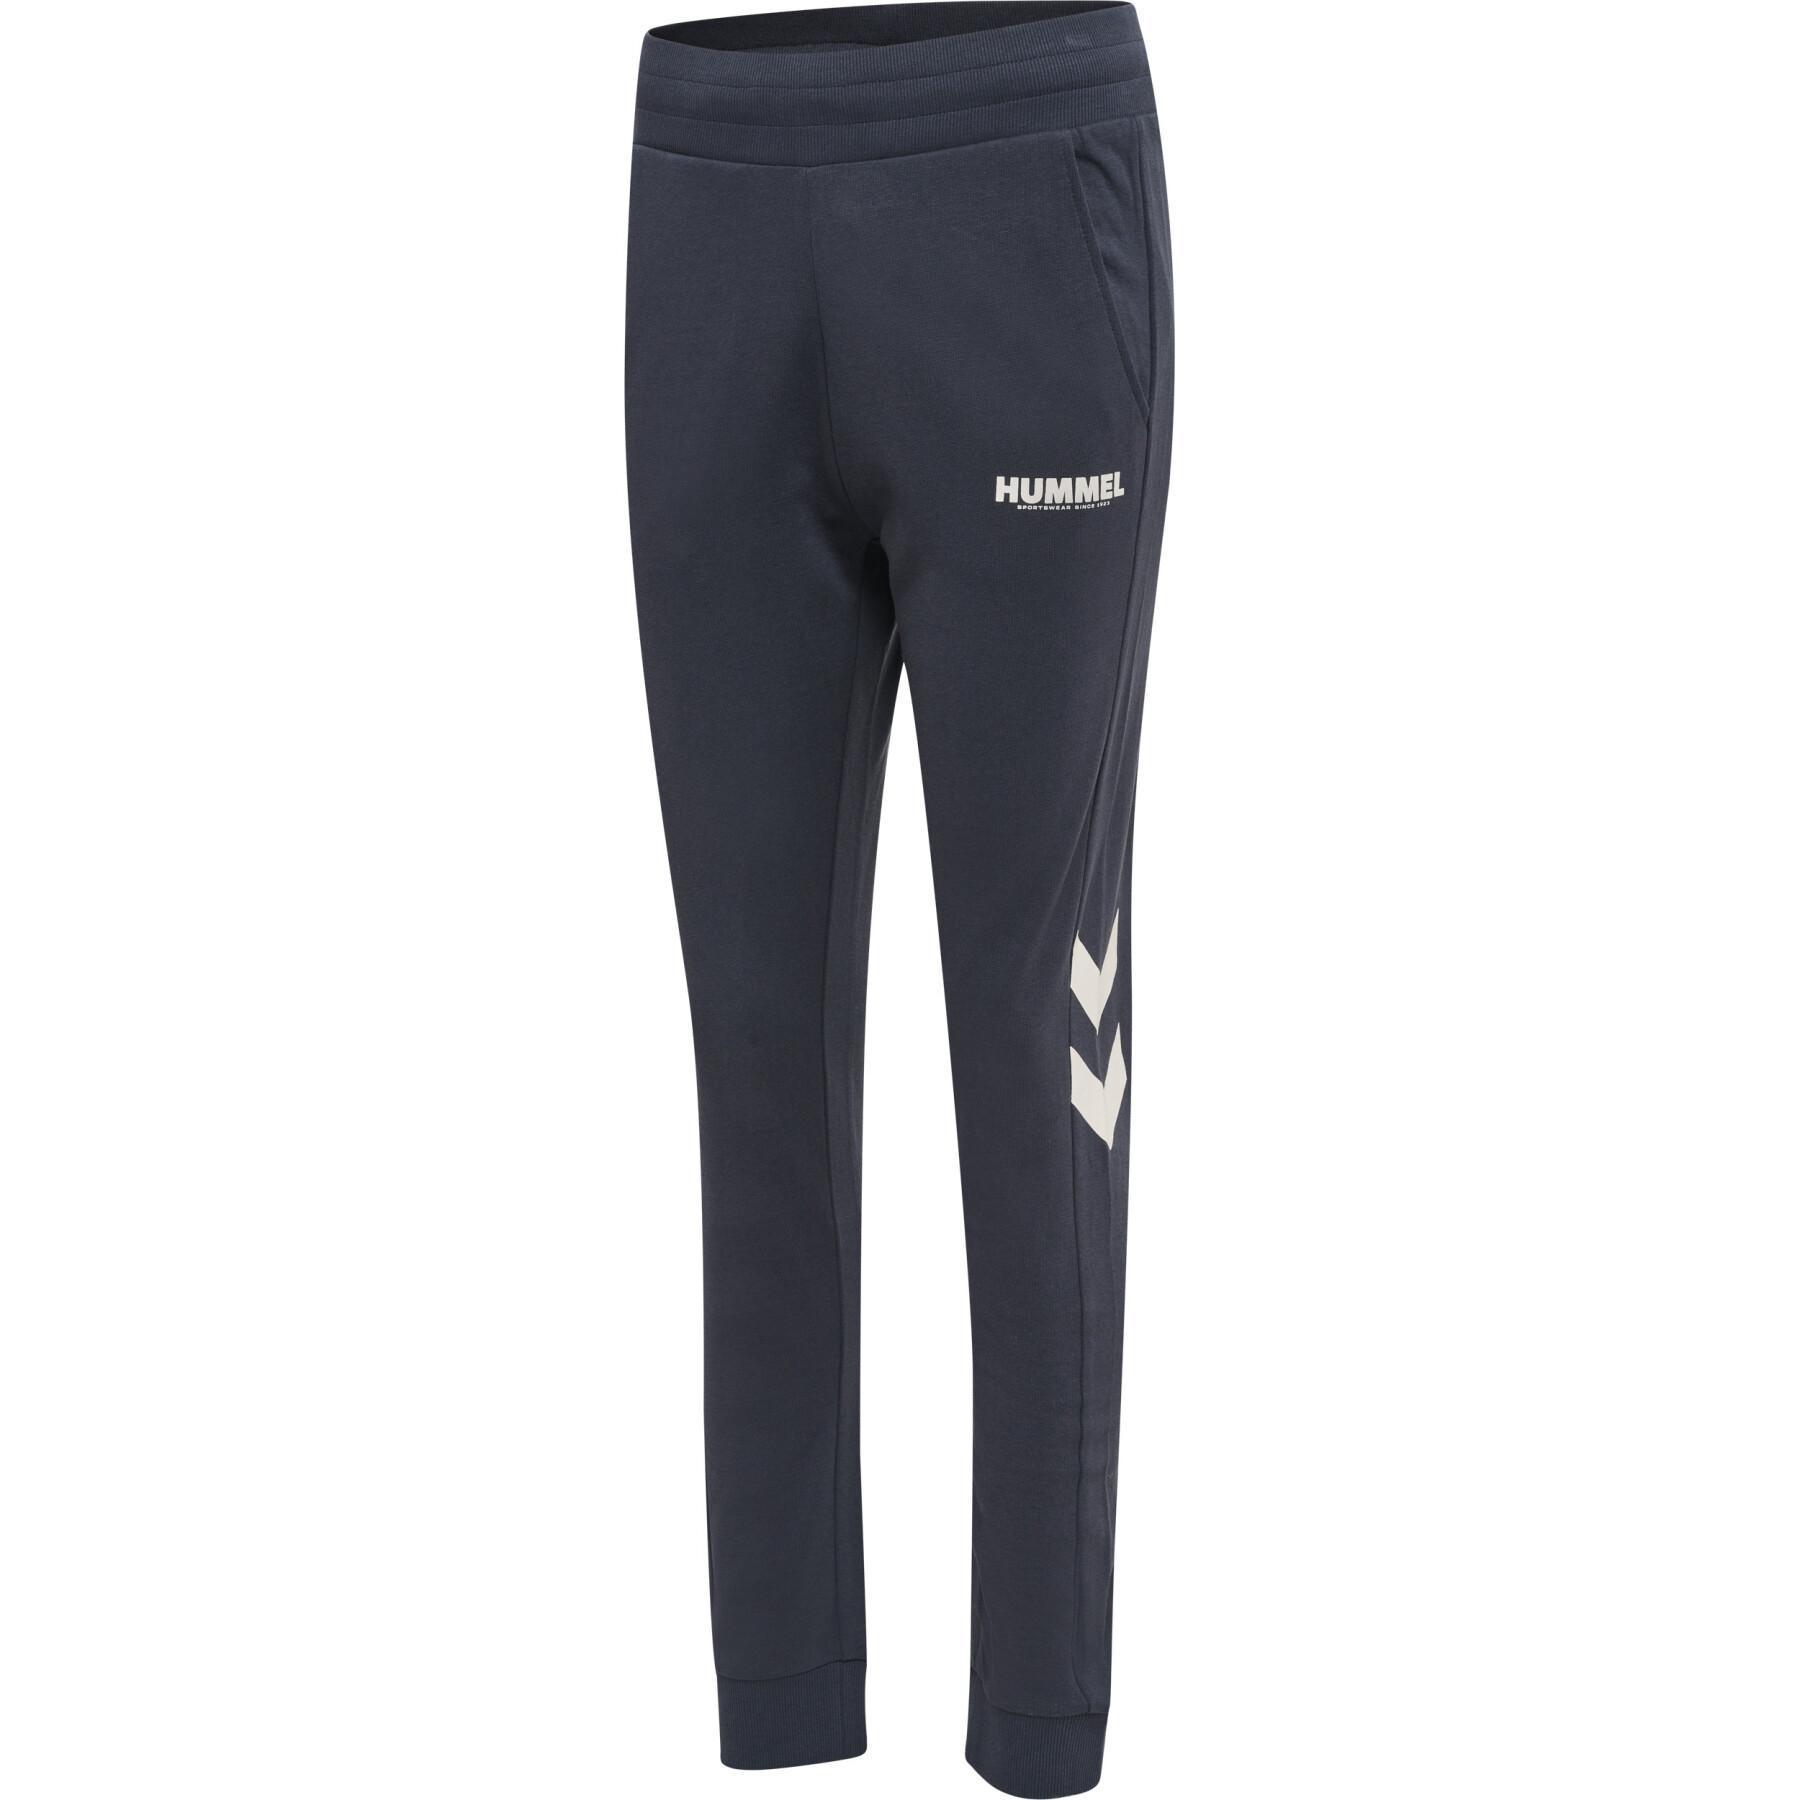 Women's tapered jogging suit Hummel Legacy - Hummel - Brands - Lifestyle